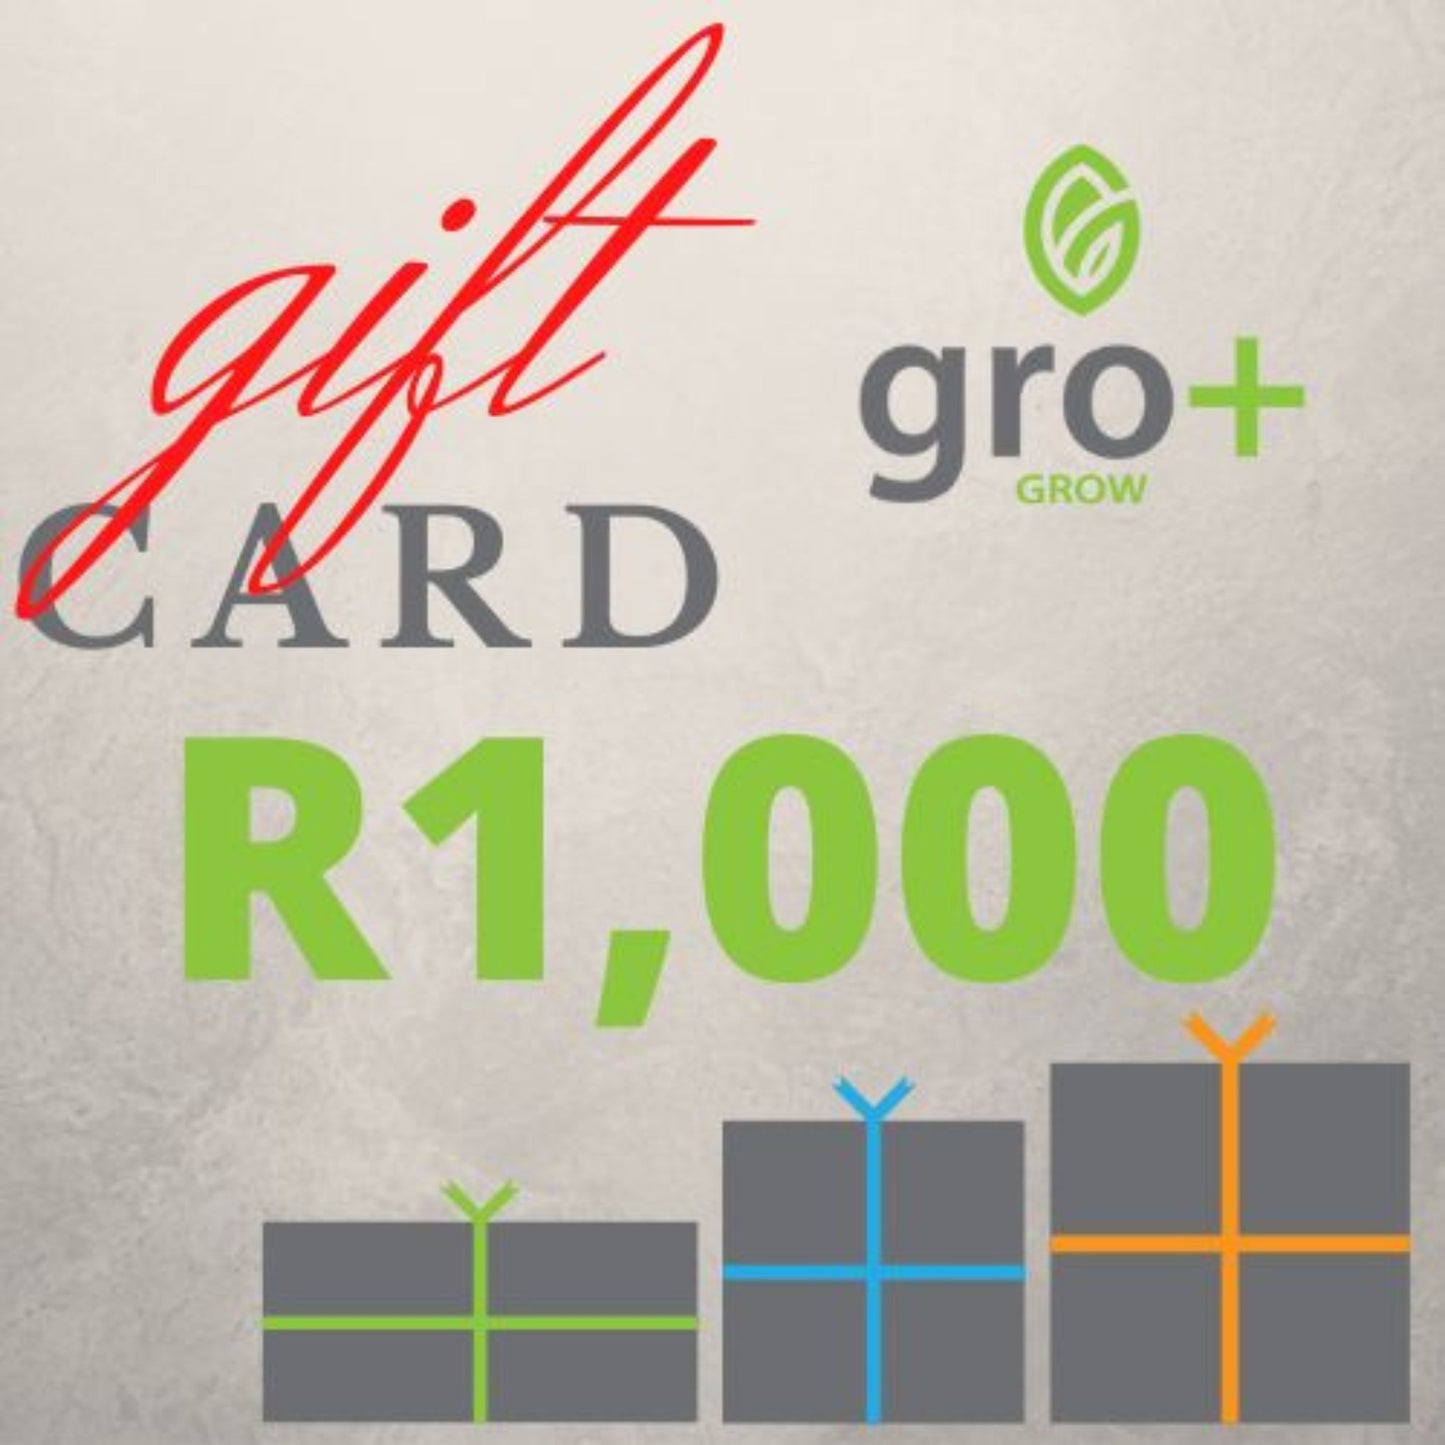 gro + R1000 Gift Card